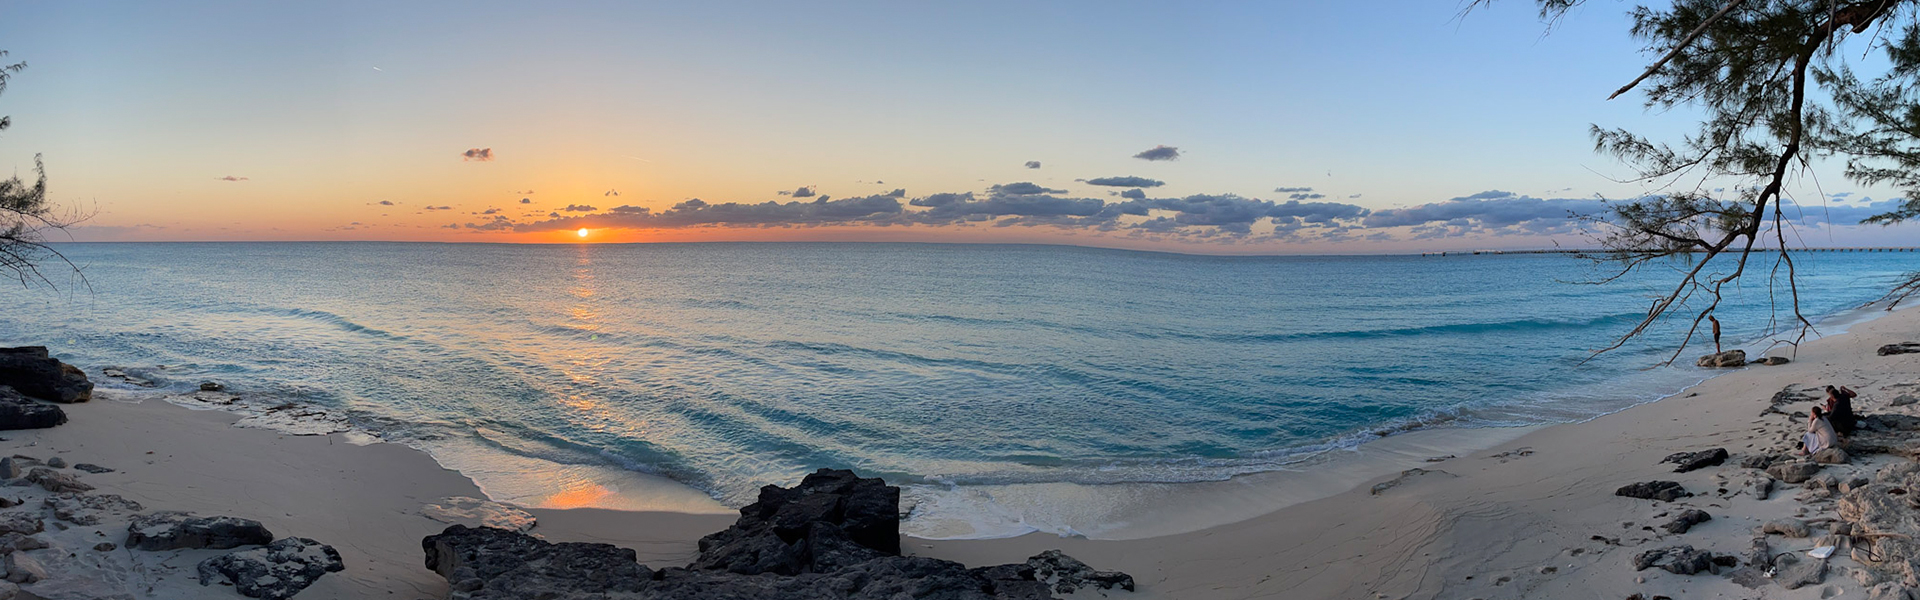 bimini-beach-sunset